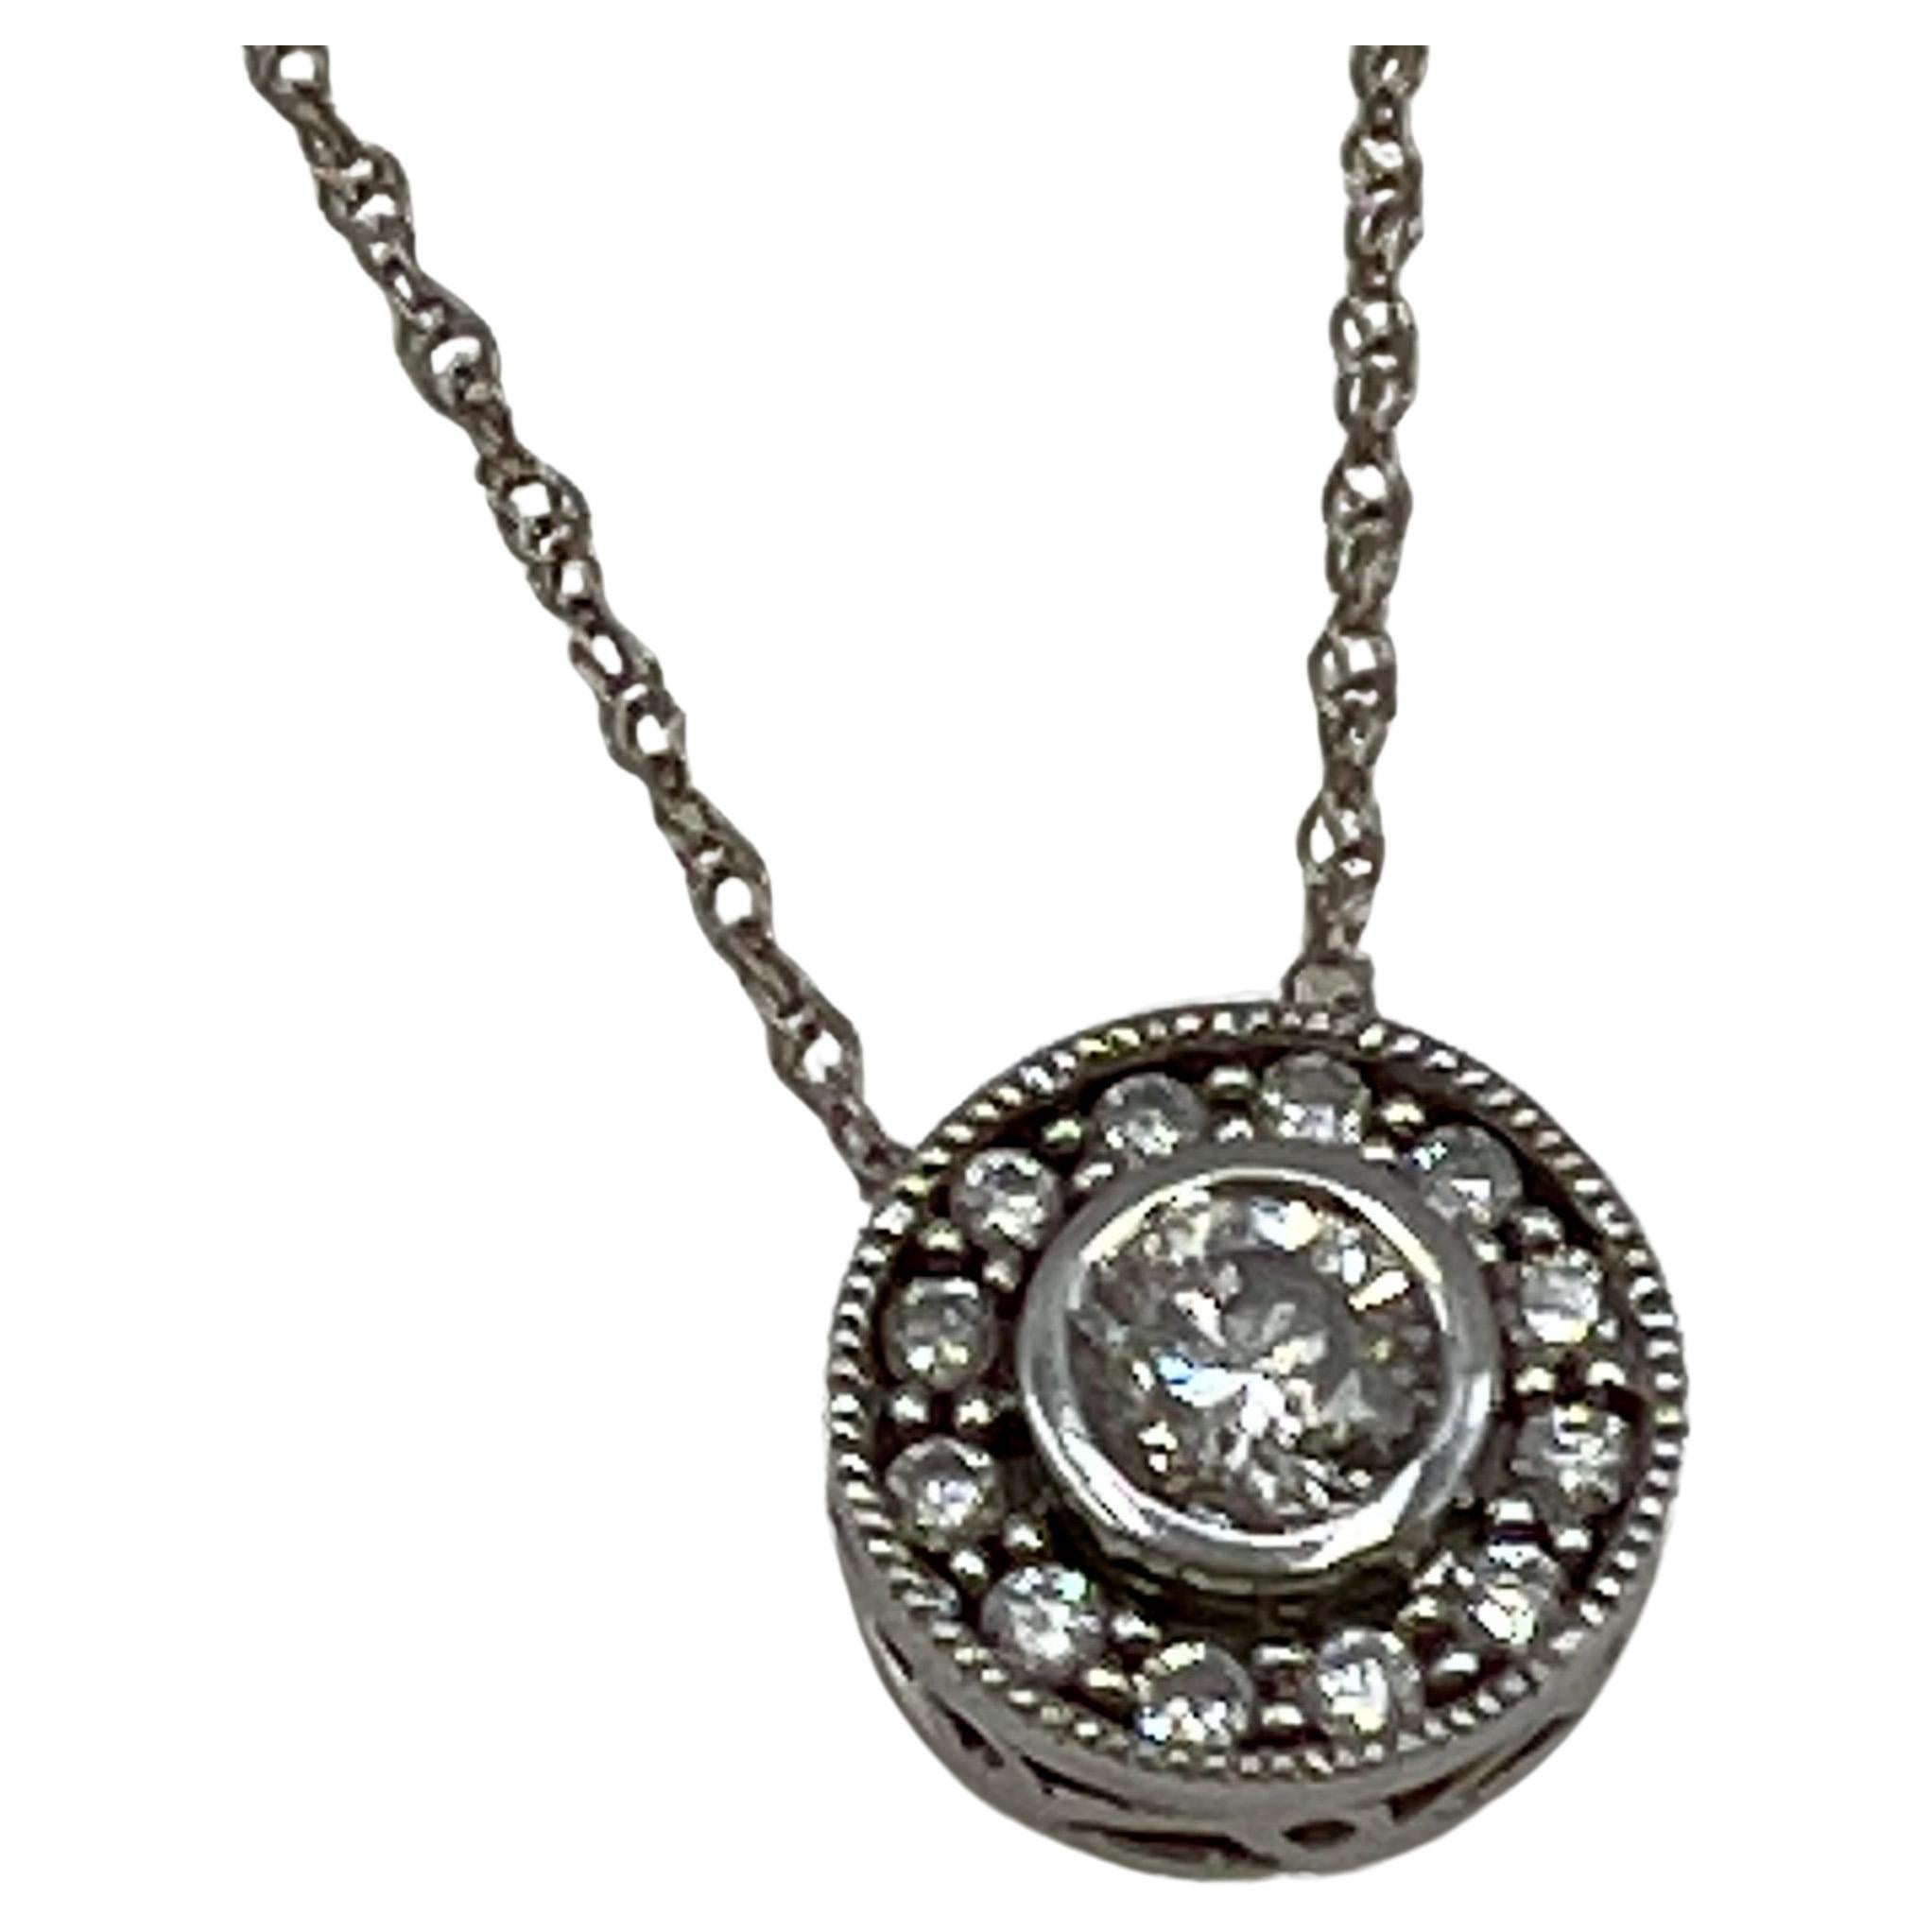 Diamond and 14 Karat White Gold Circular Pendant Necklace 